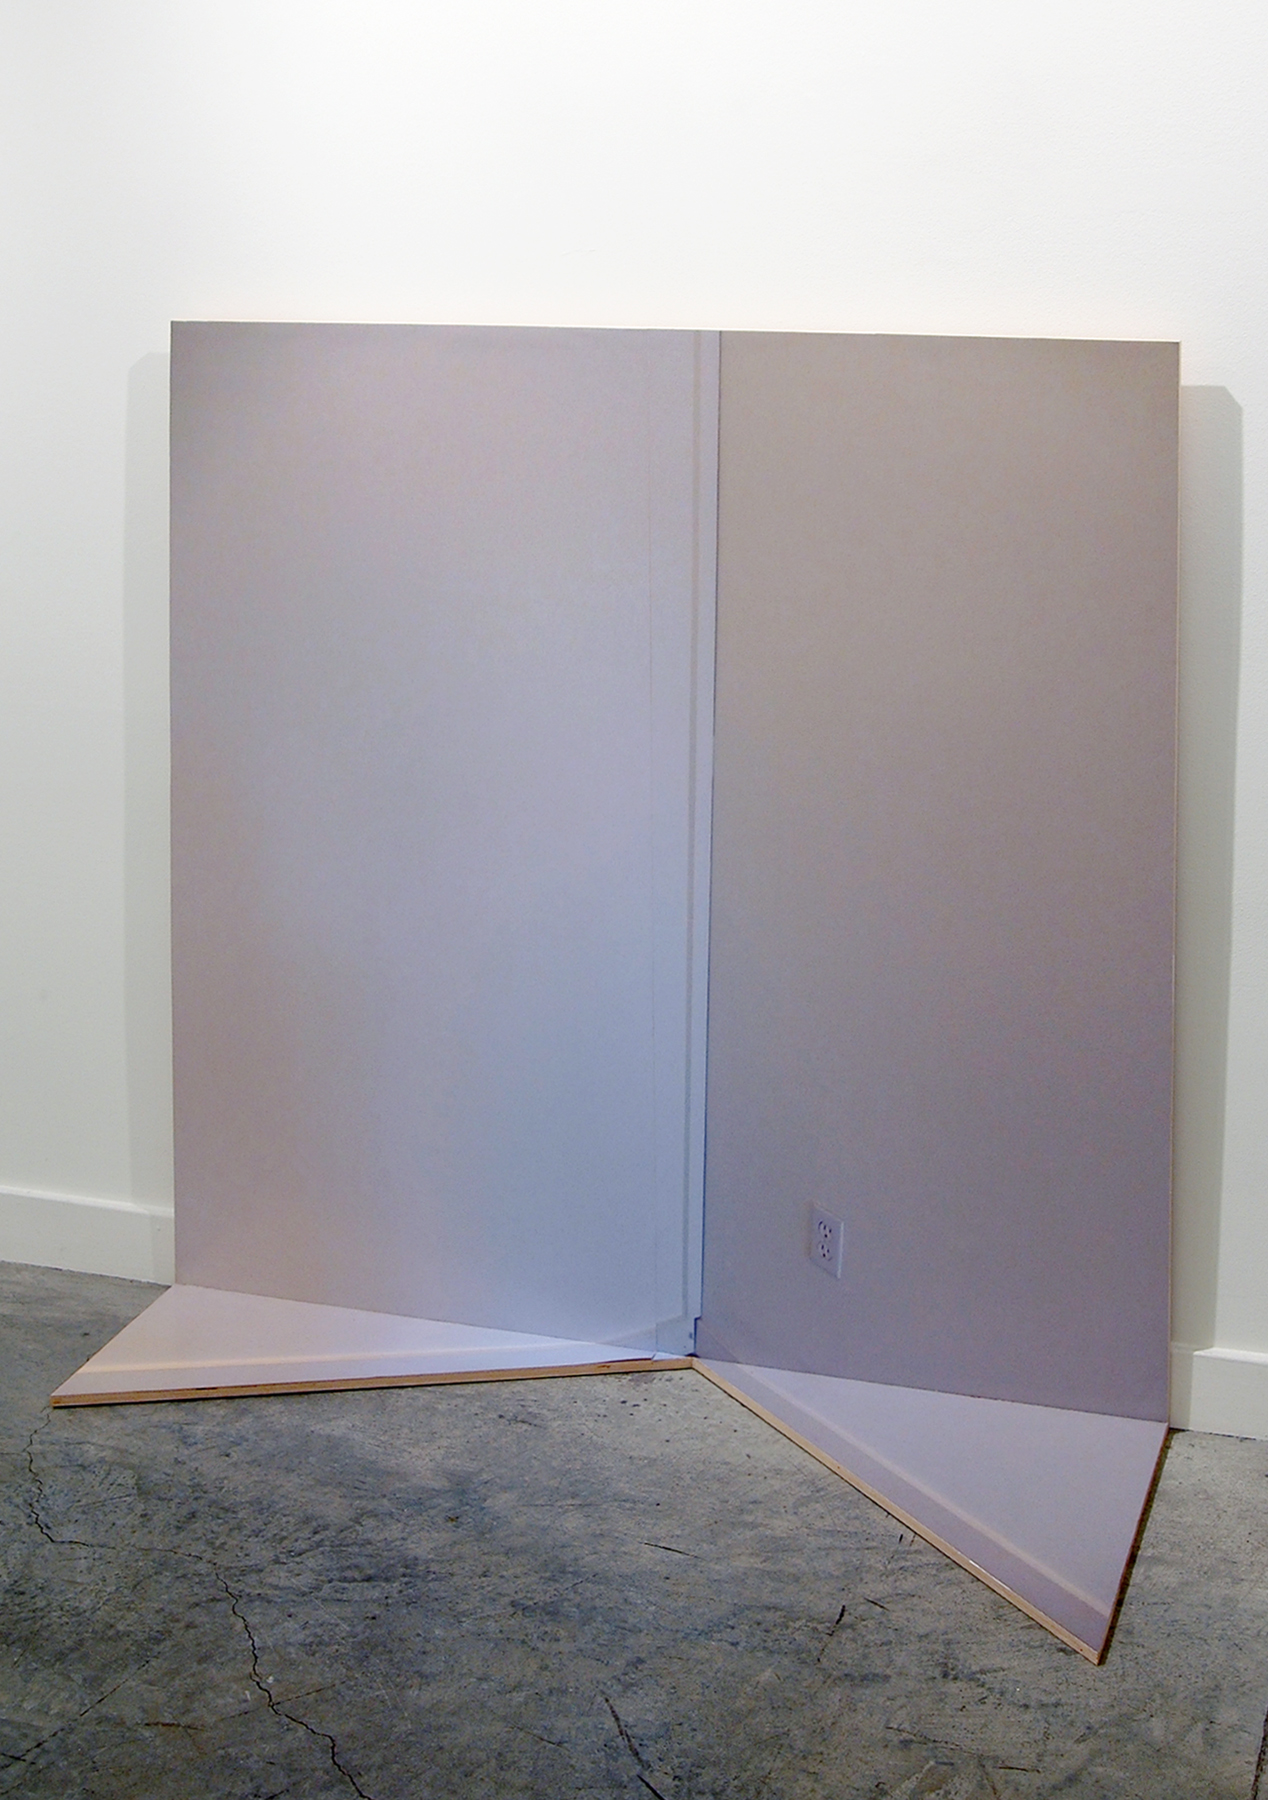   WITH CINDER BLOCKS WE FLATTEN OUR PHOTOGRAPHS  Emma Spertus,&nbsp; Corner , ink jet print on plywood, 44" x 44" x 16.25", 2013 